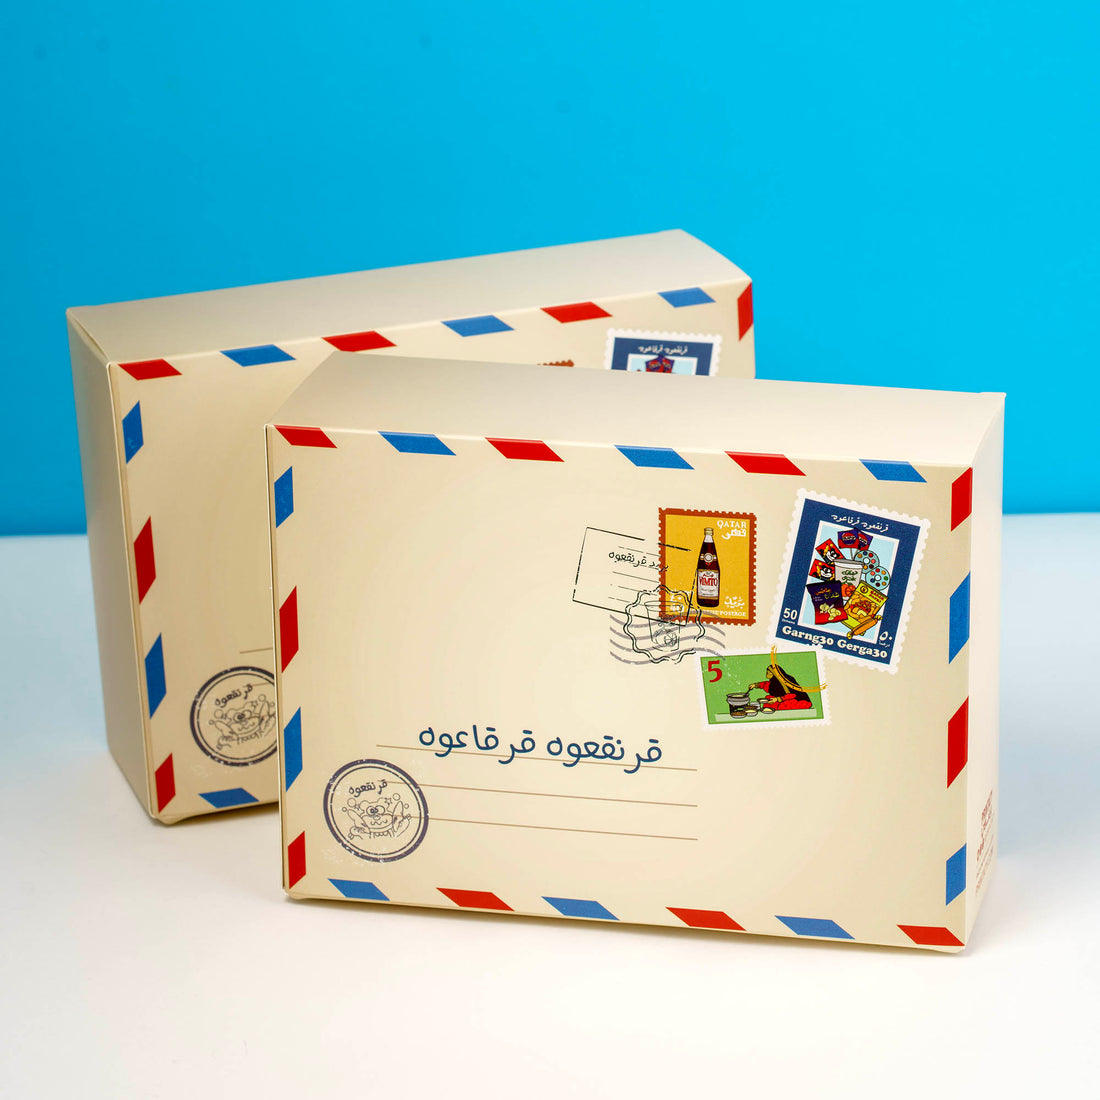 Garangao: An Old Letter (10 boxes)